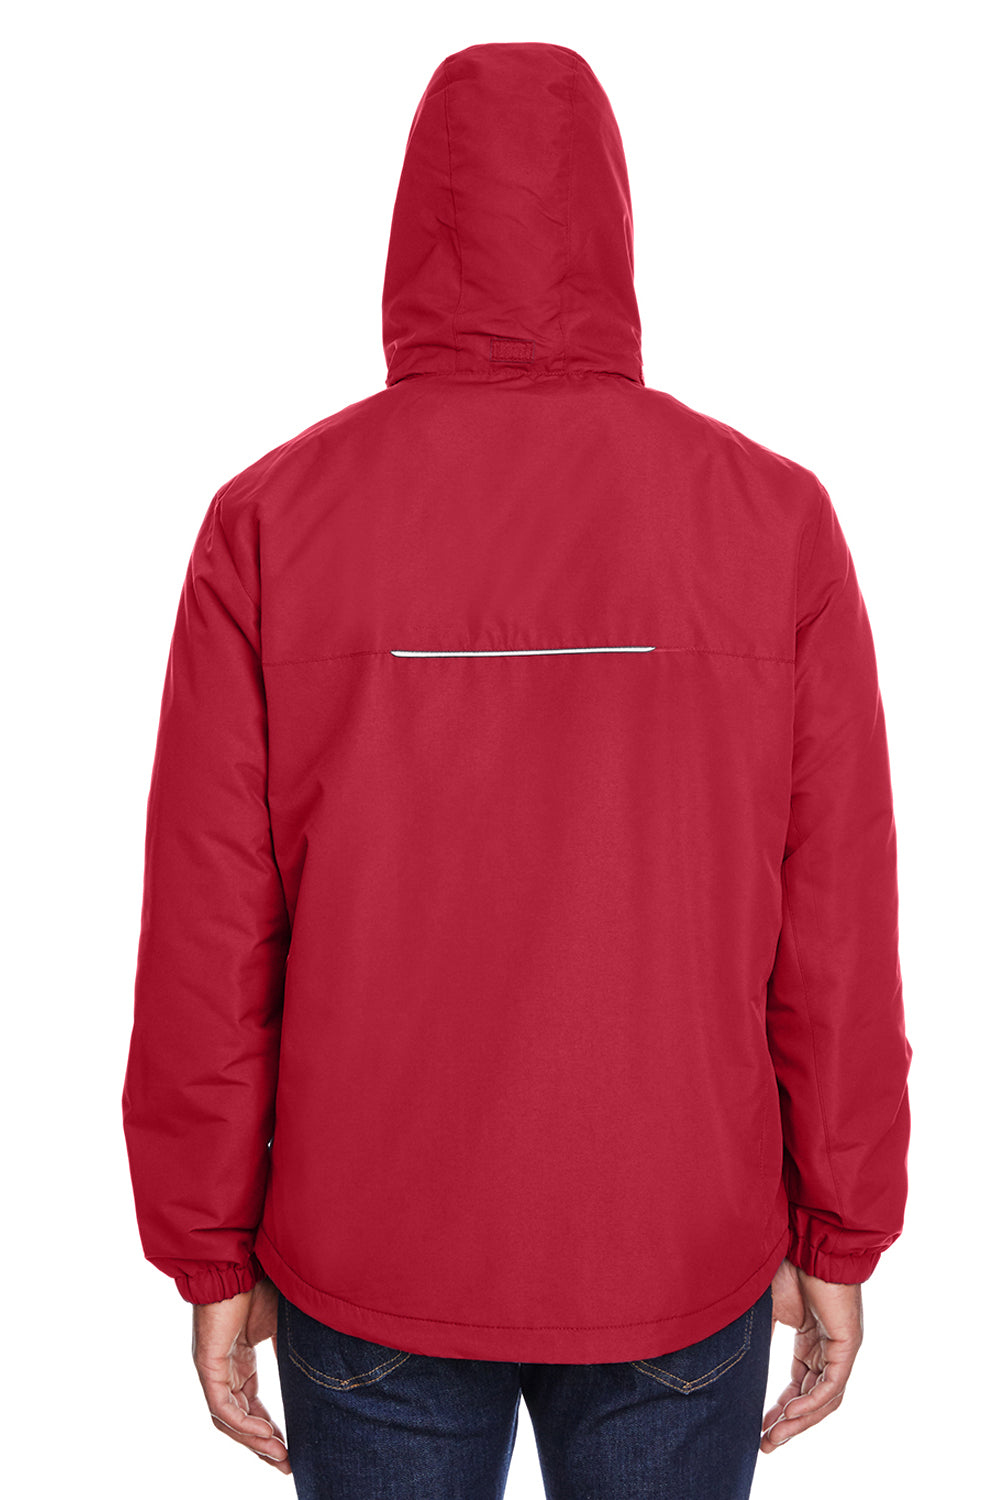 Core 365 88224 Mens Profile Water Resistant Full Zip Hooded Jacket Red Back